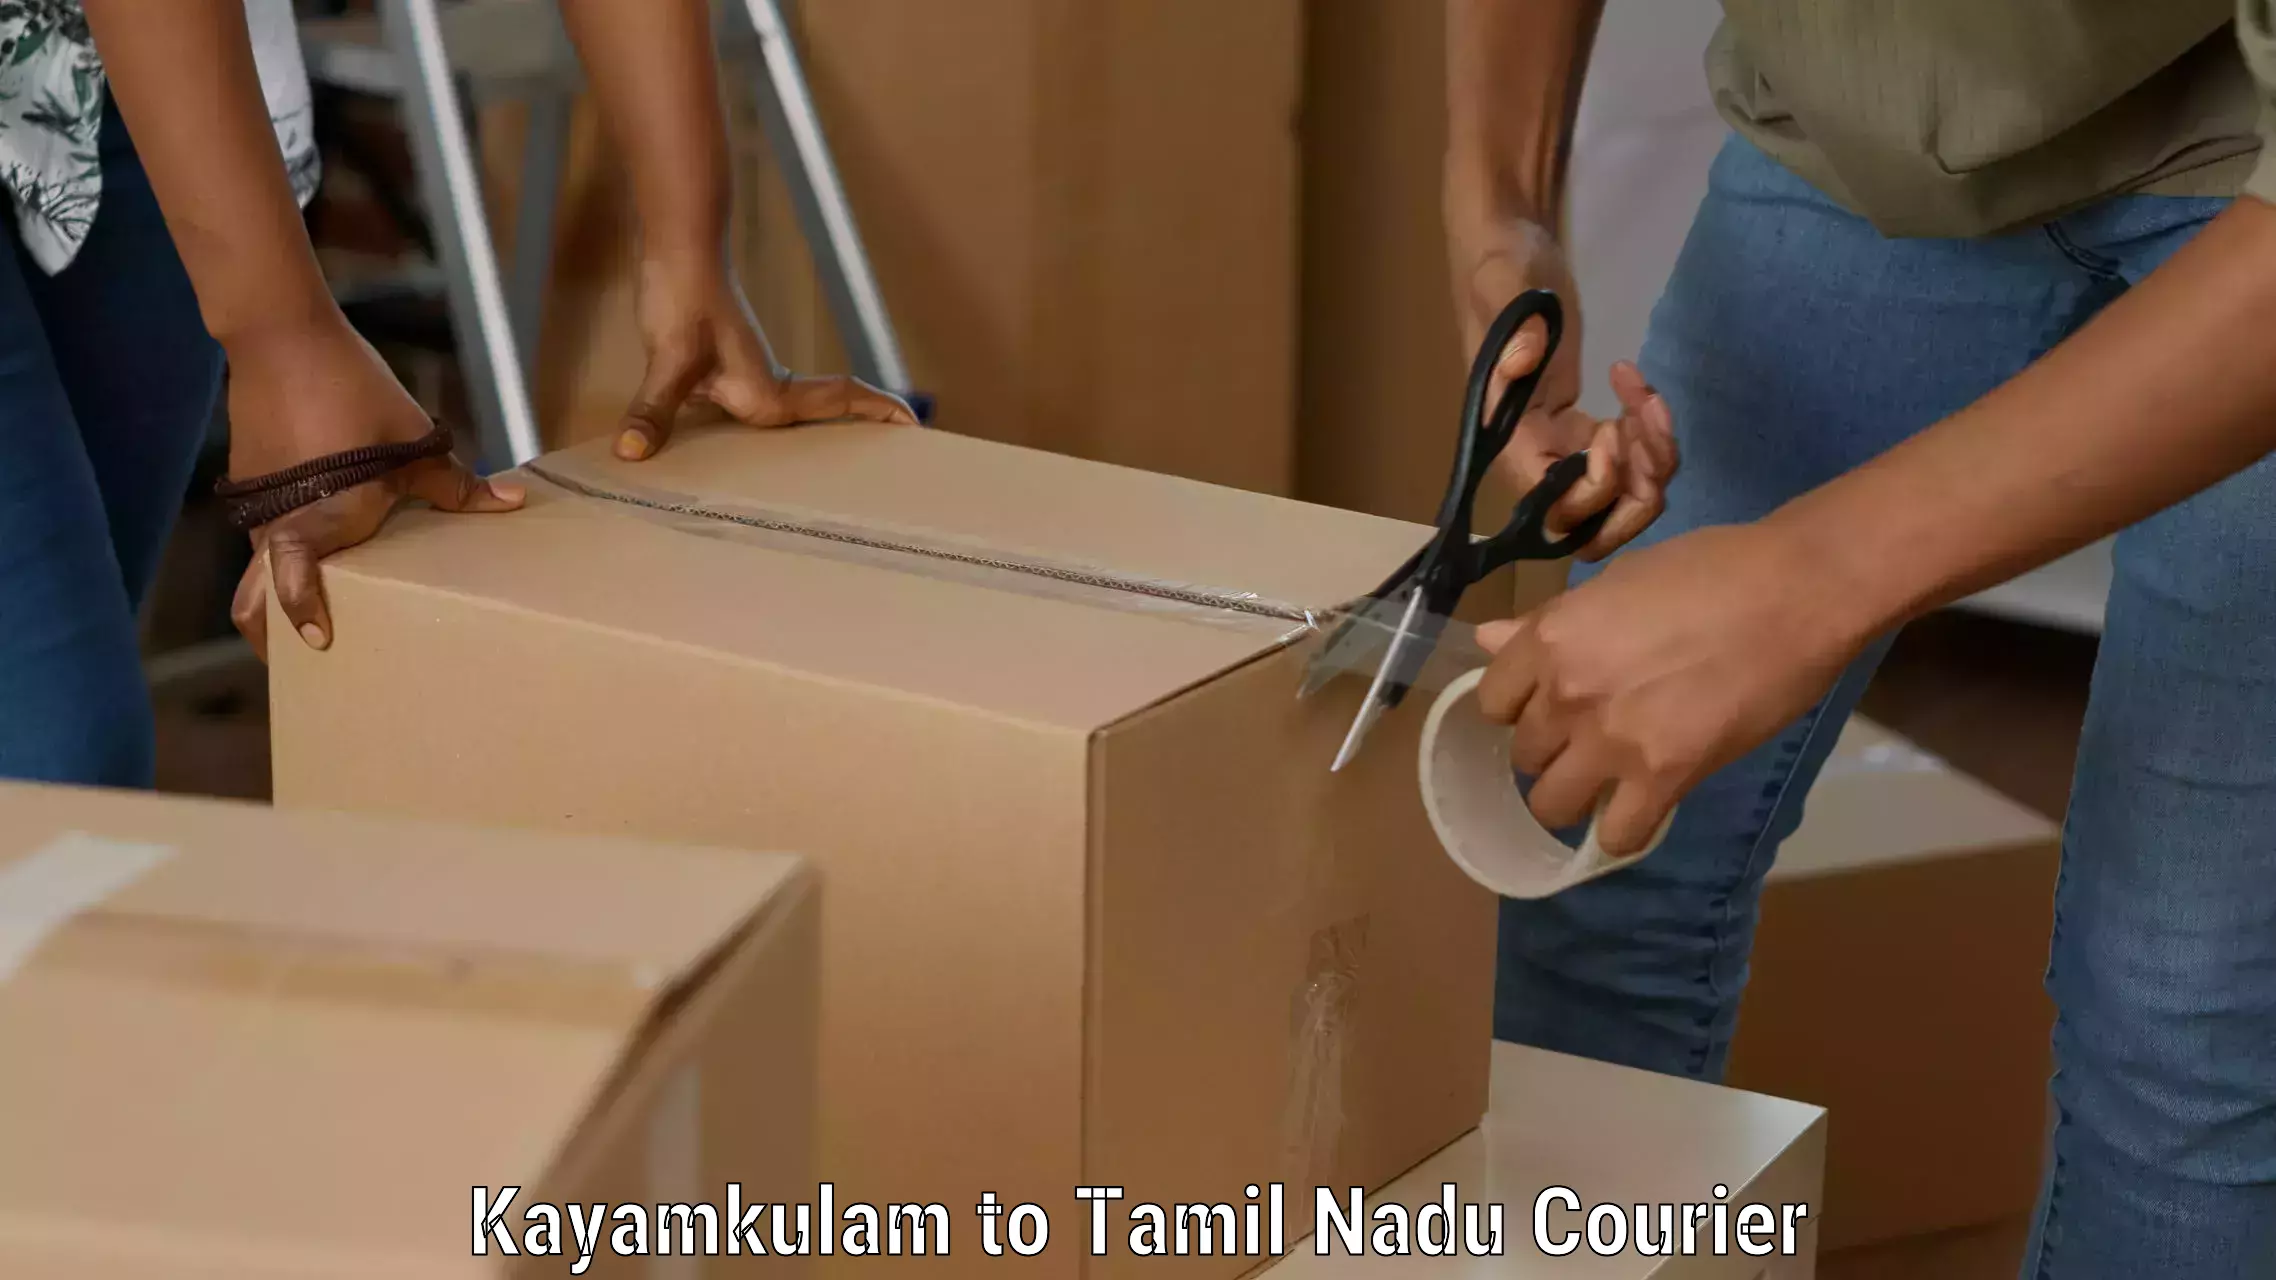 Bulk shipping discounts Kayamkulam to Tiruchi